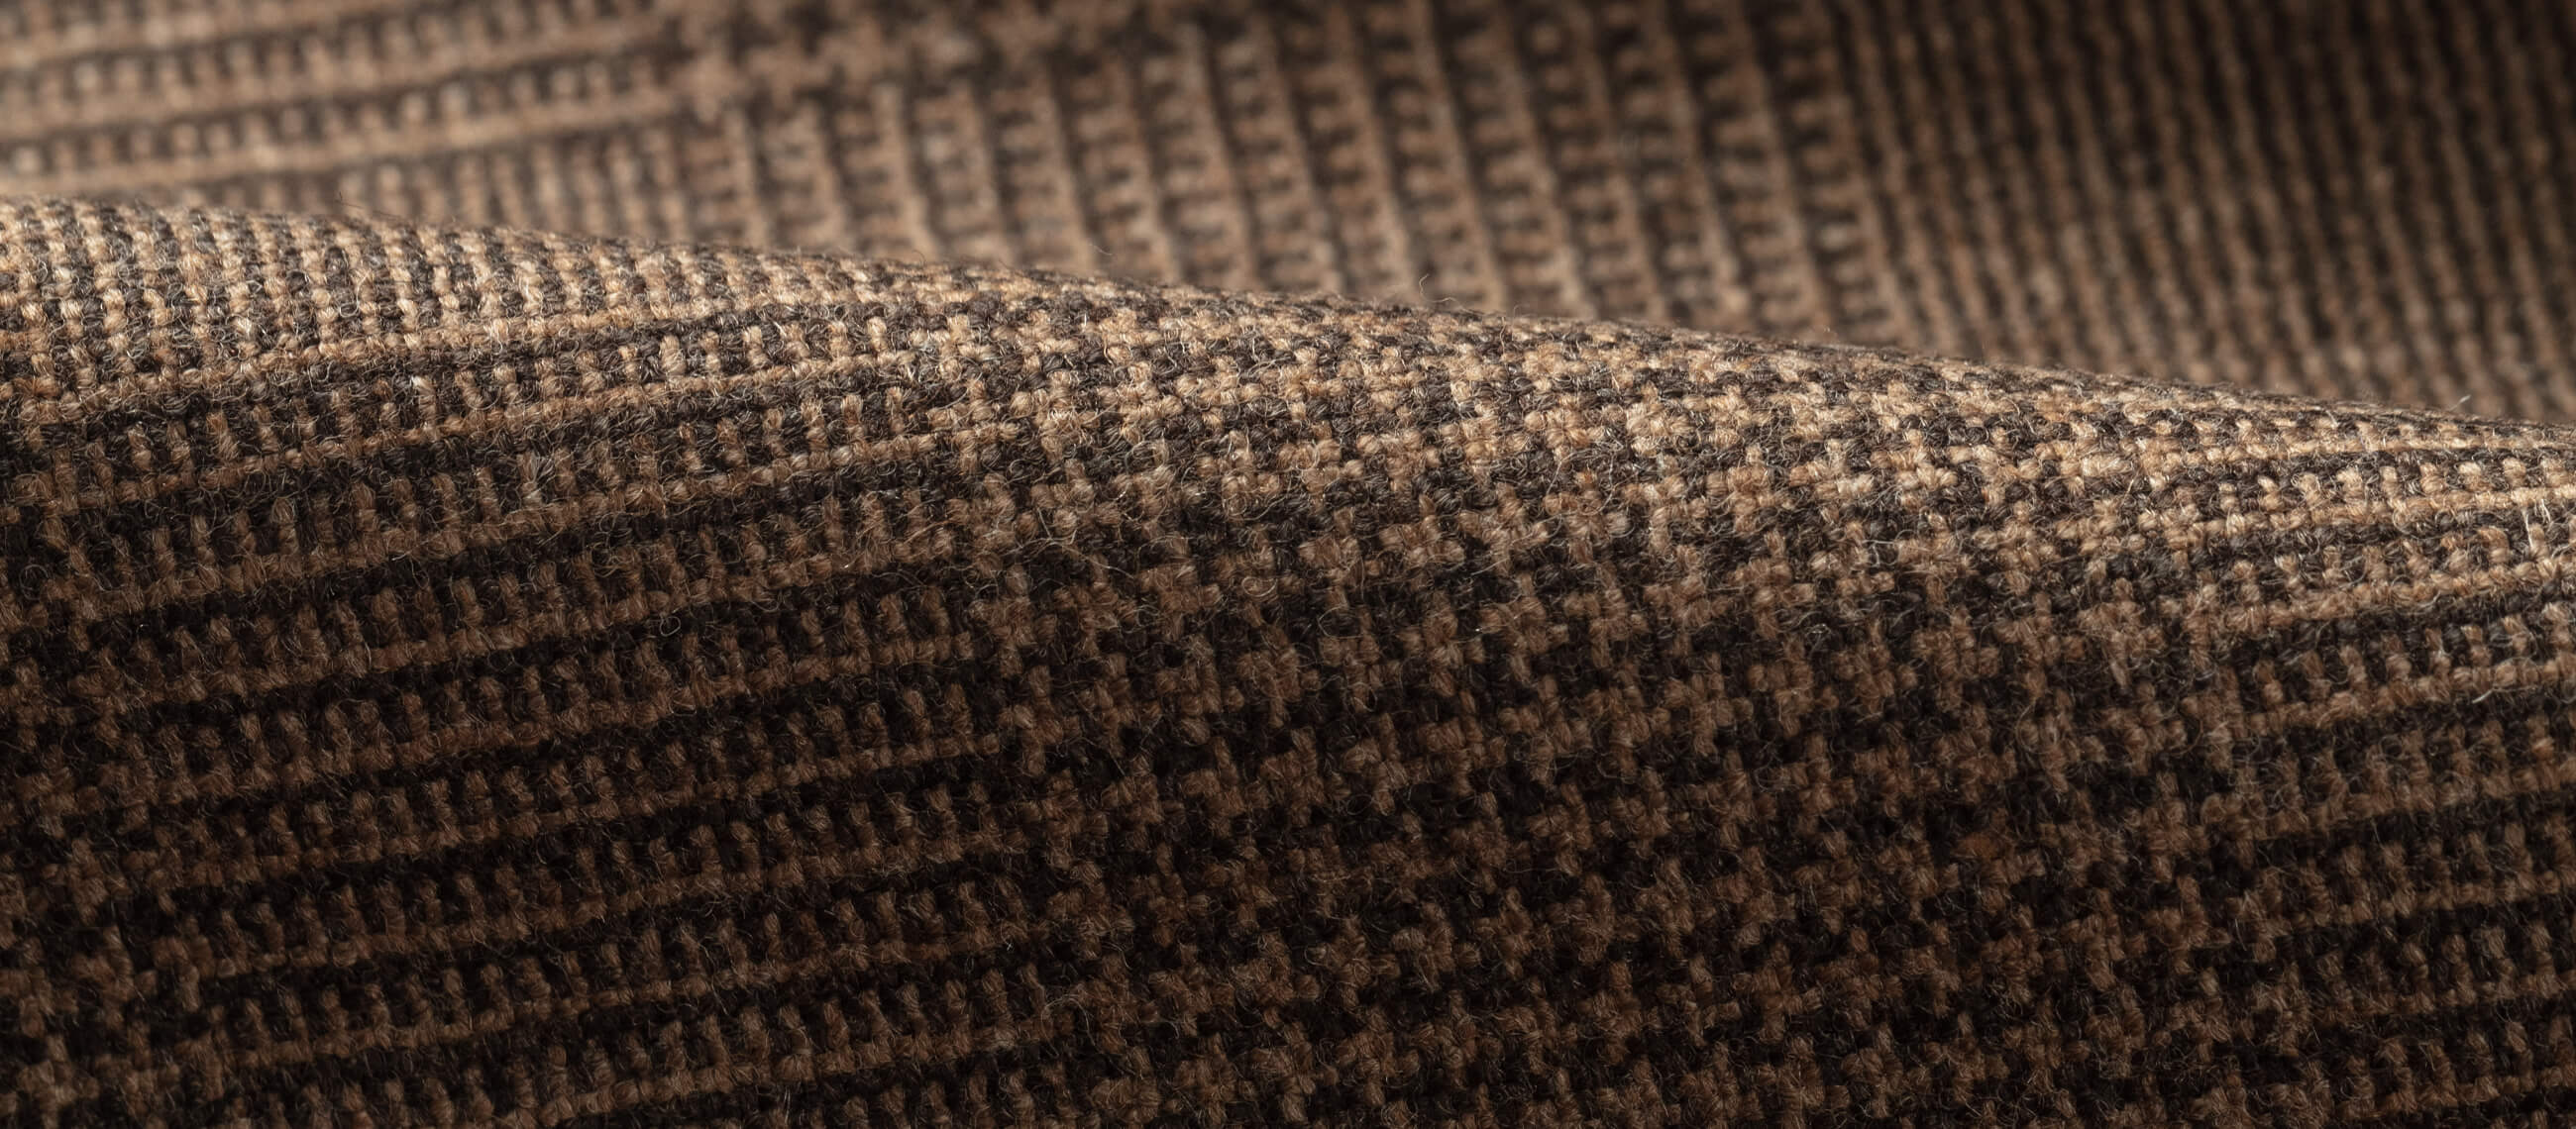 Fabric weaves